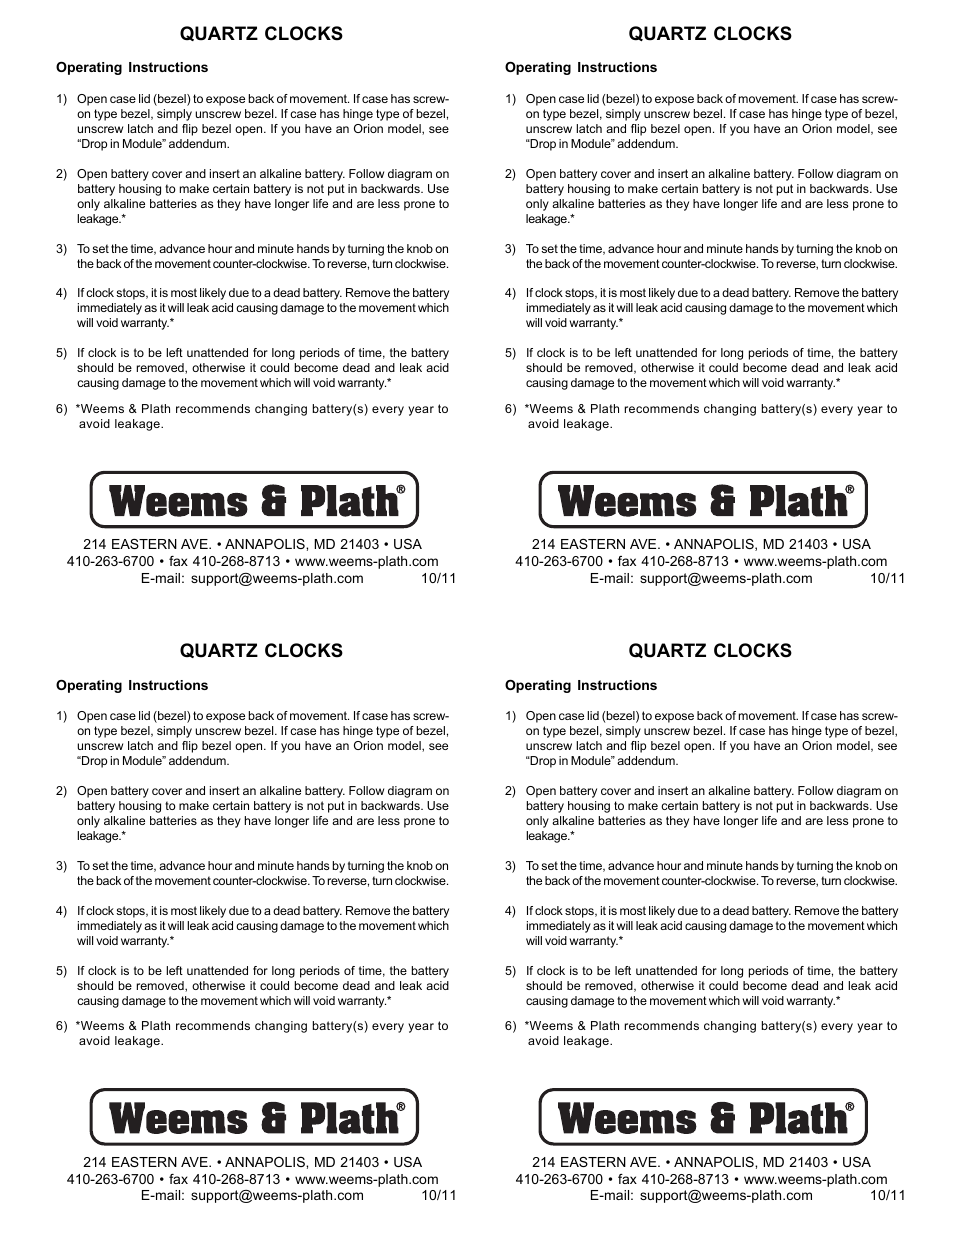 Weems and Plath Atlantis Quartz Clock User Manual | 1 page